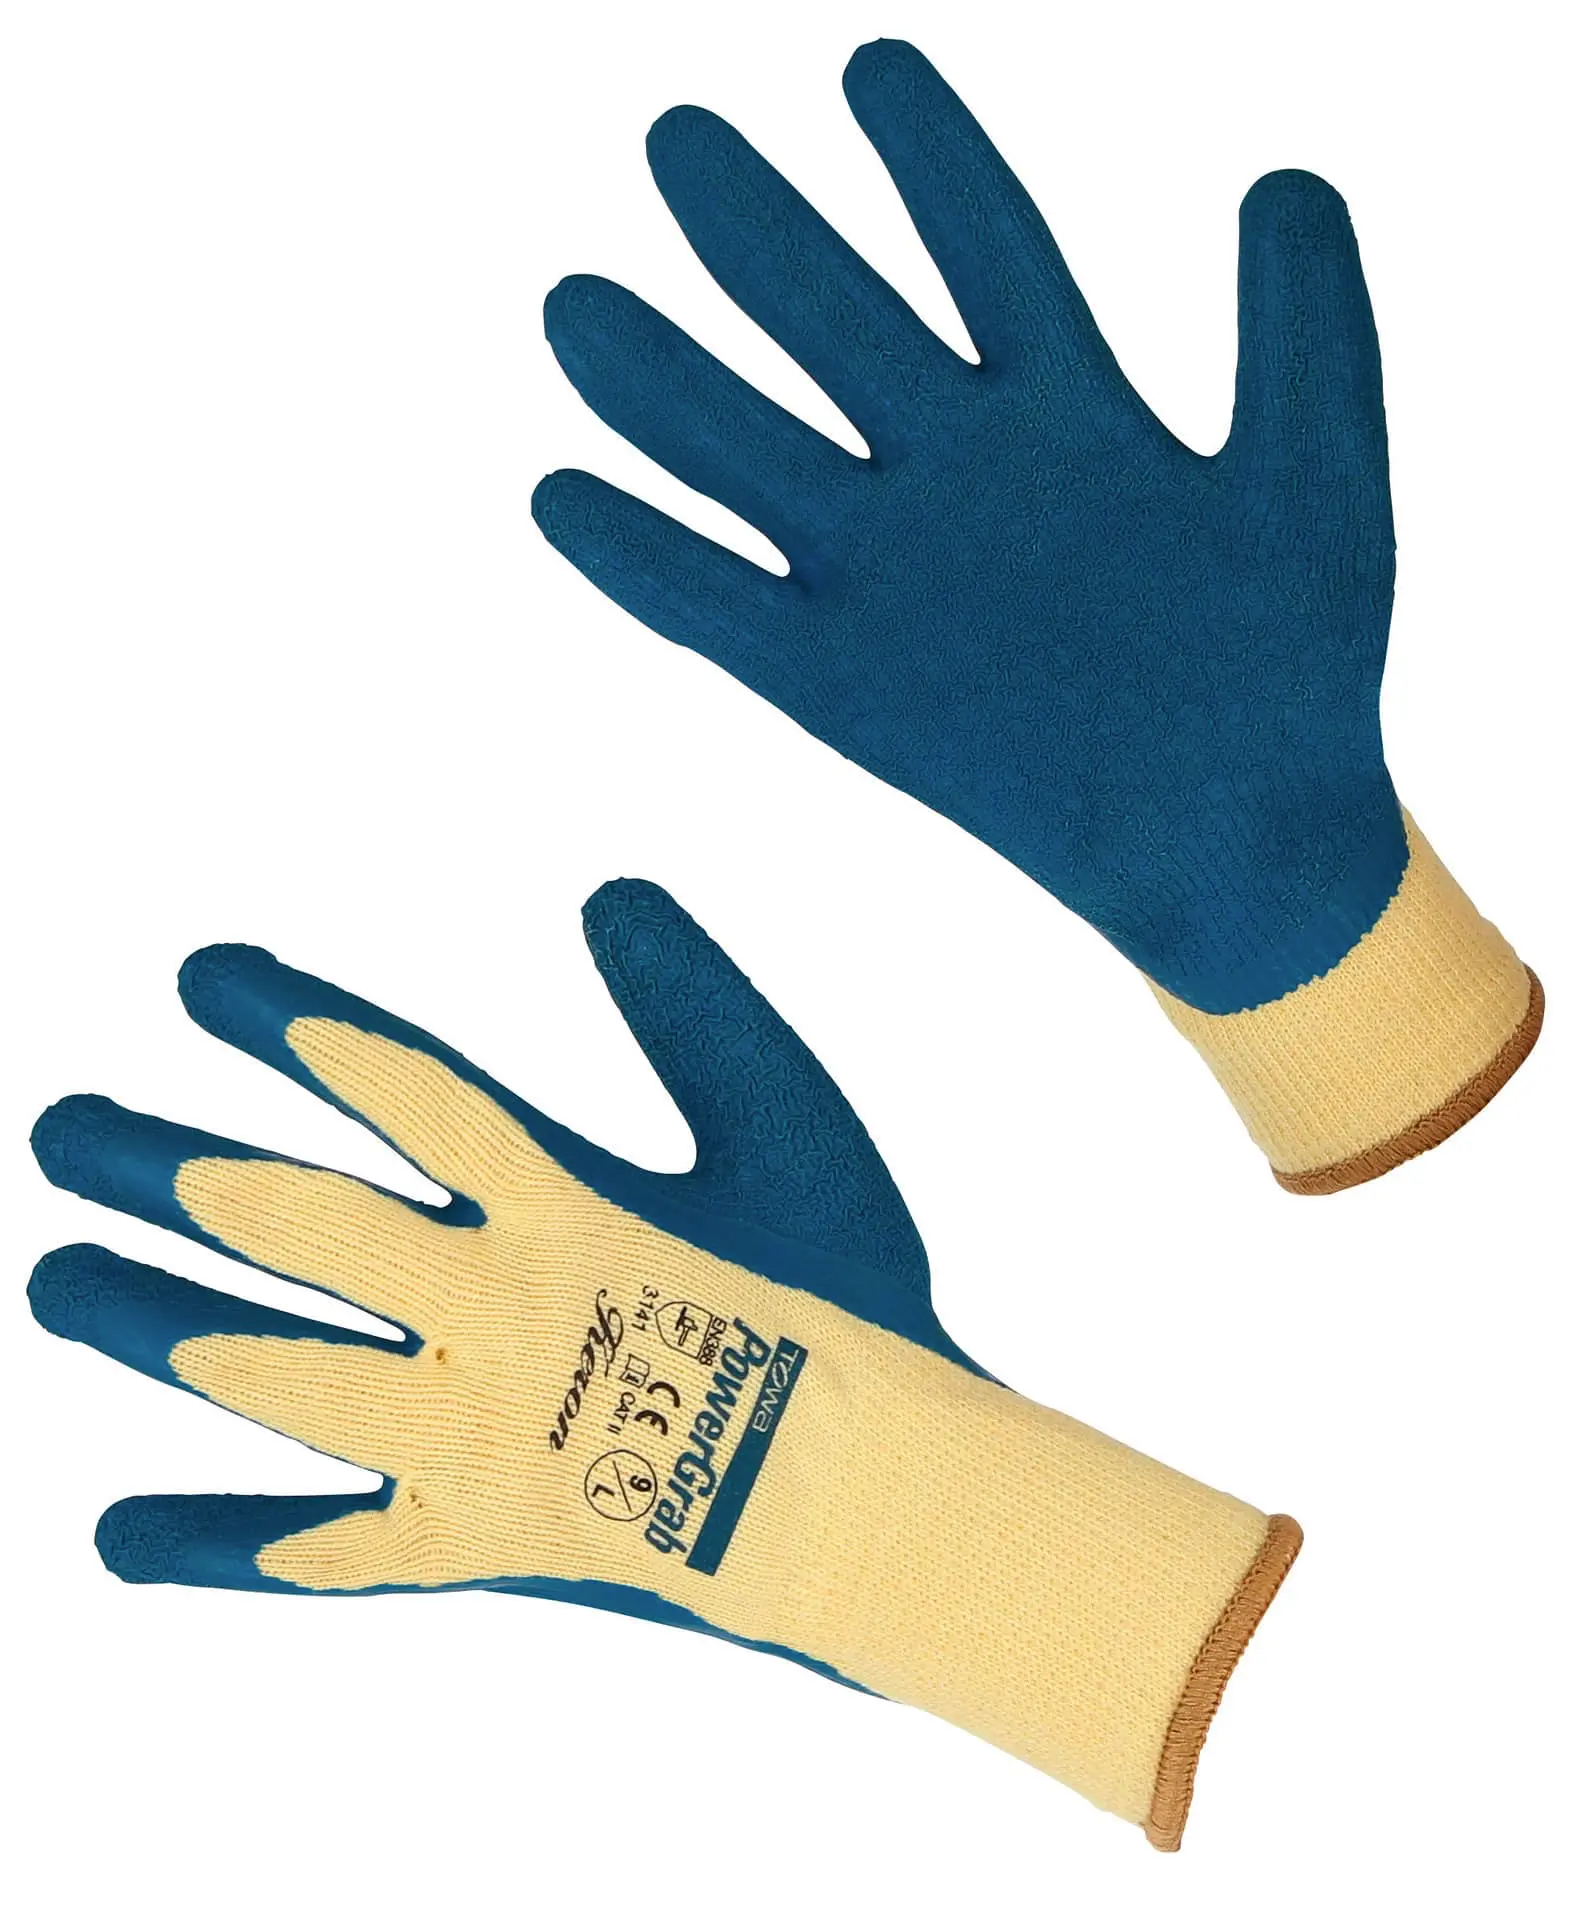 Glove PowerGrab polyester/cotton